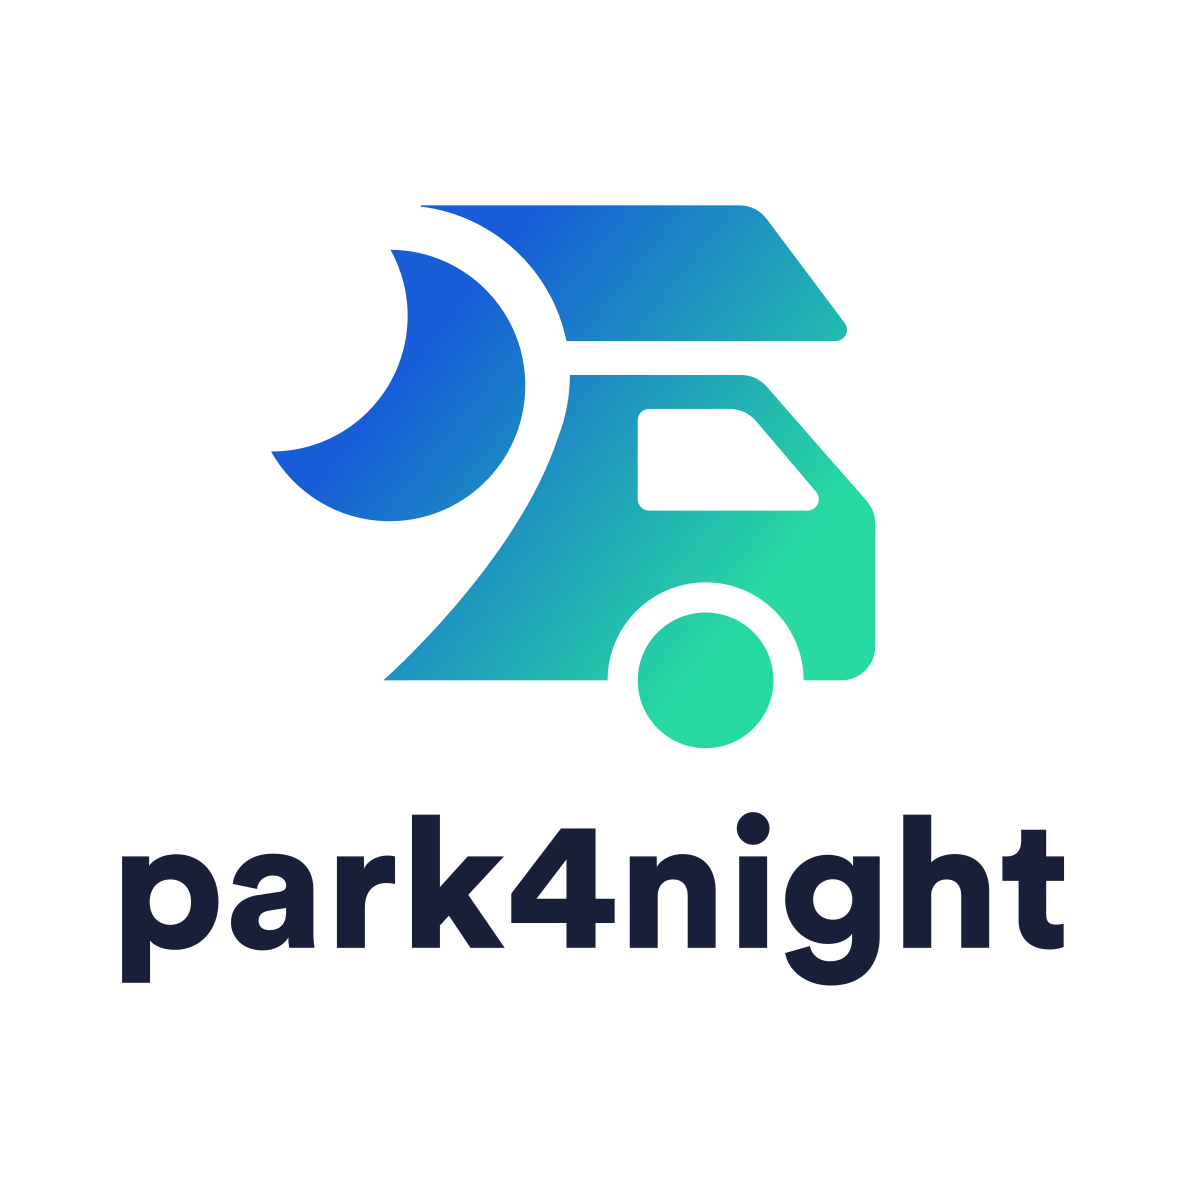 Park4night